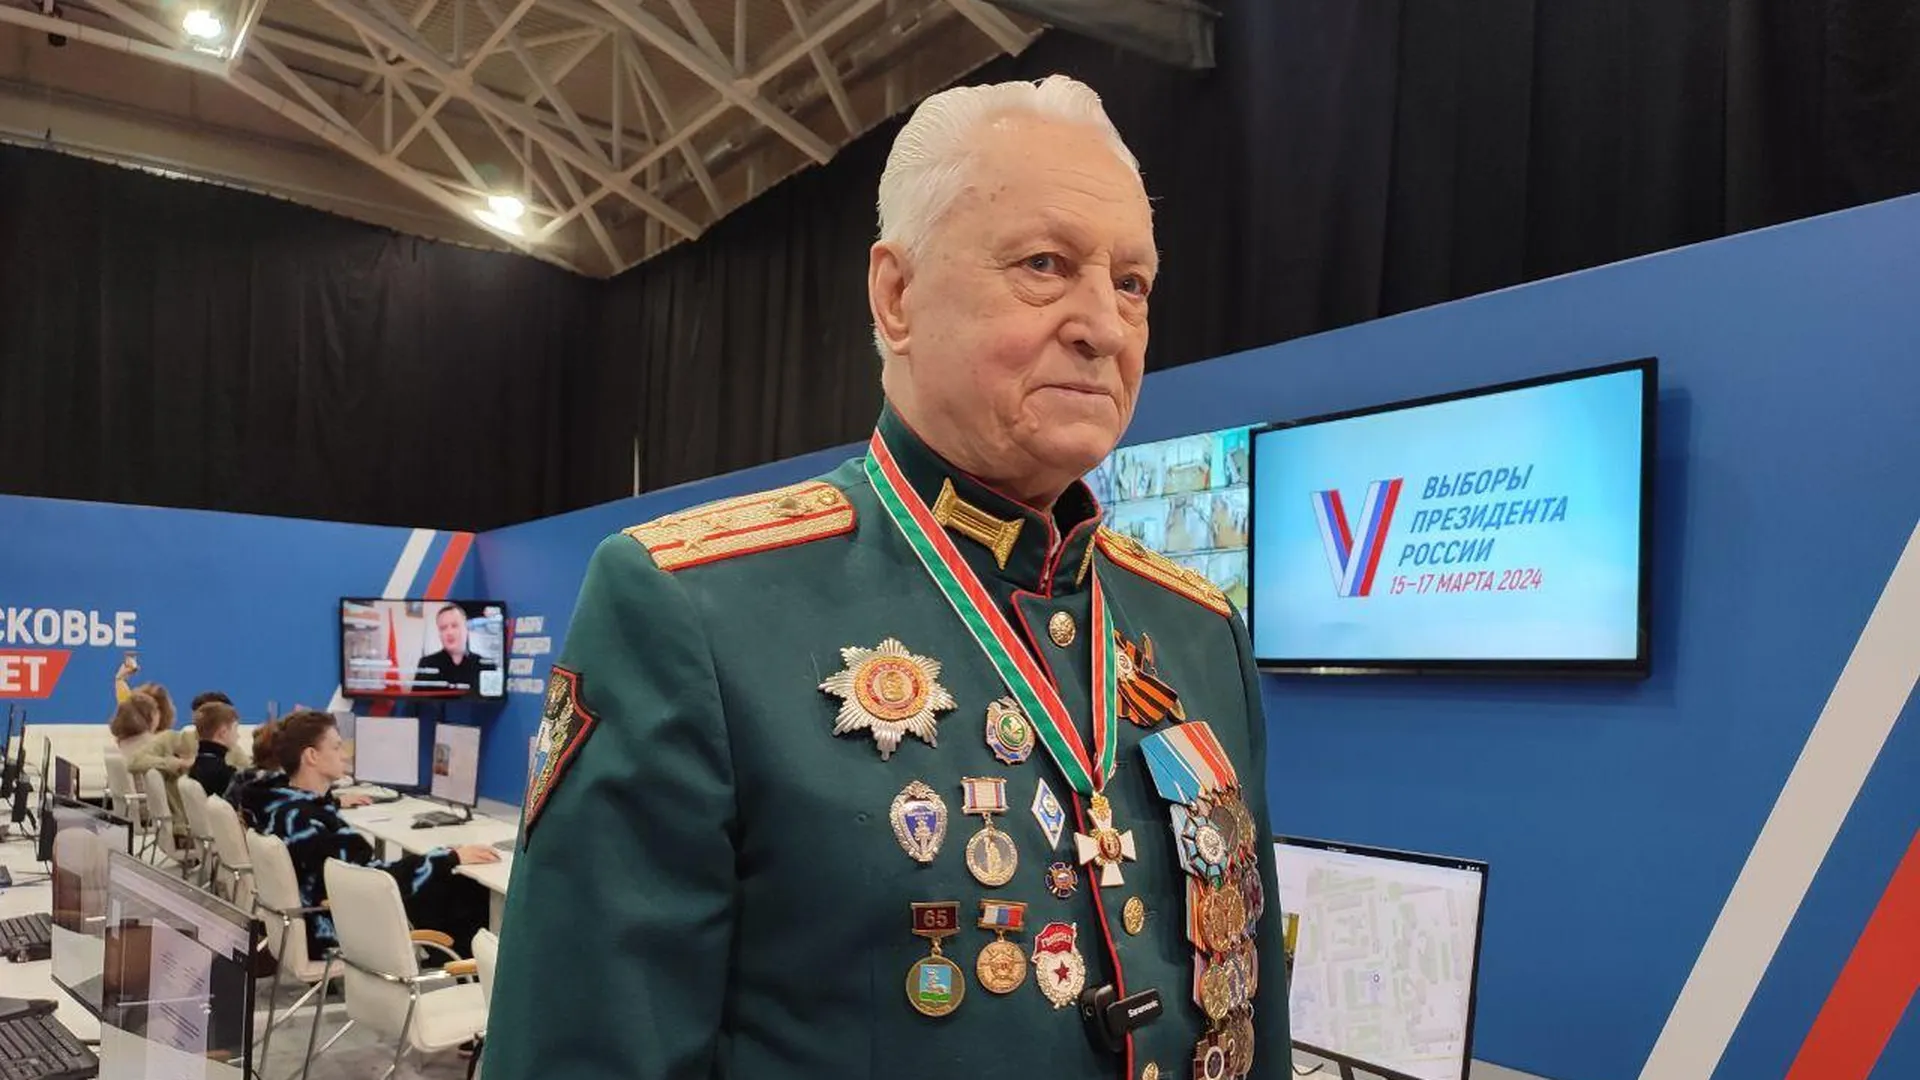 Кавалер Ордена Почета Крегжде: Россия — самая демократичная страна